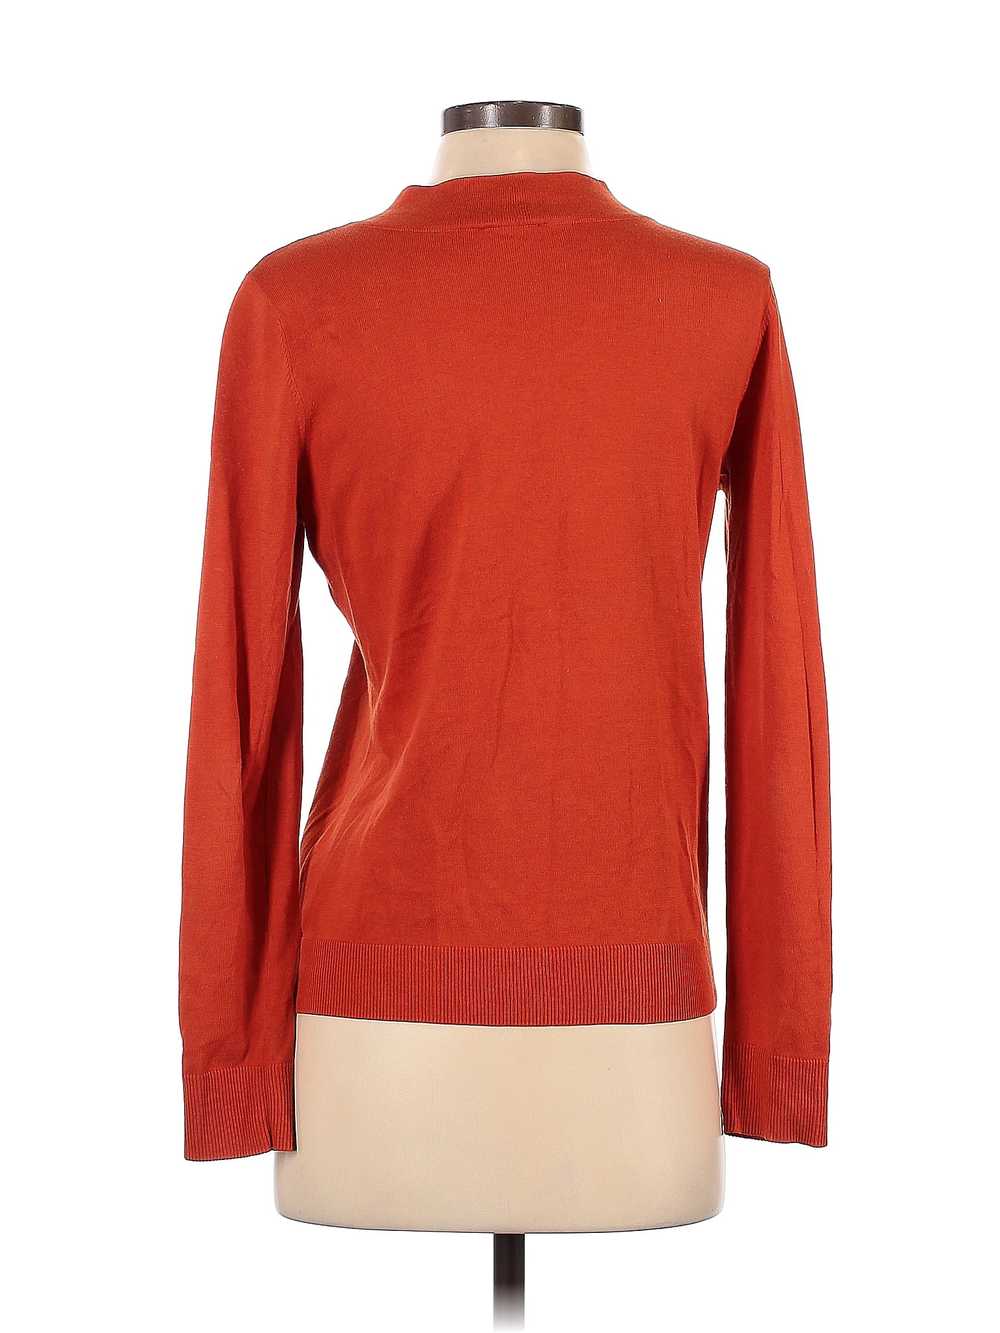 Talbots Women Orange Pullover Sweater S - image 2